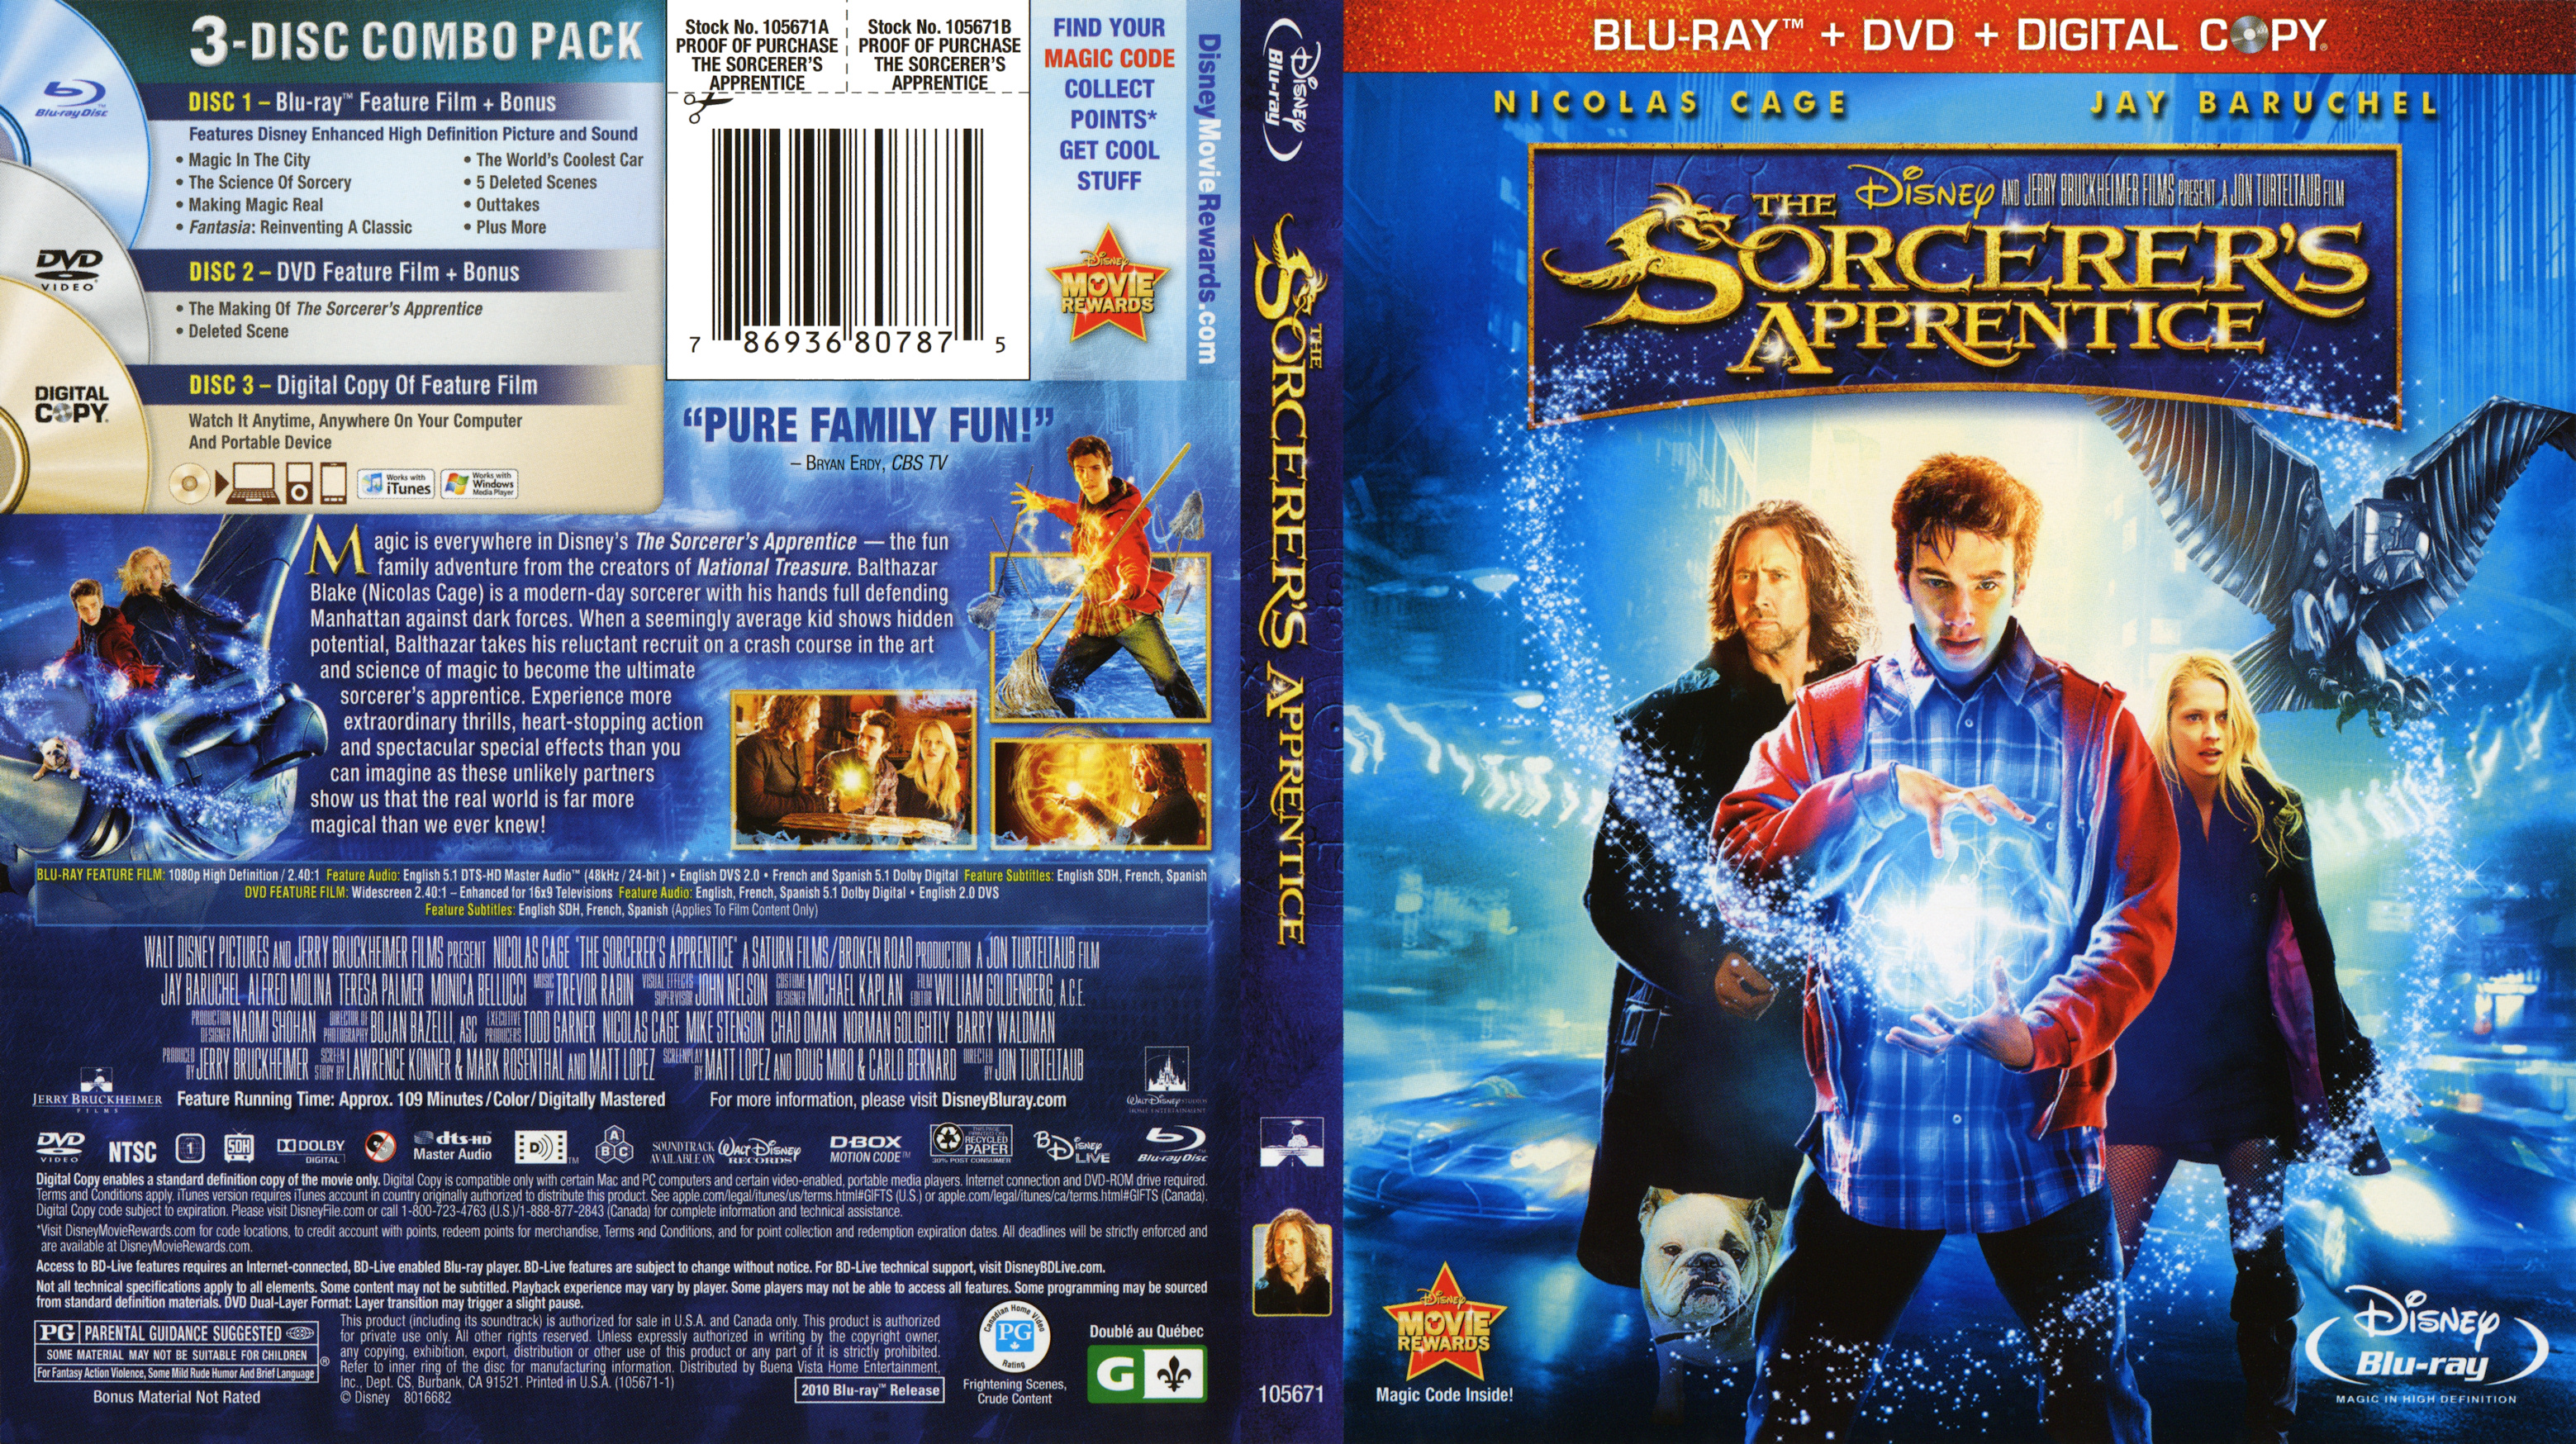 Blu ray магическая битва 2. Cover Blu ray ученик чародея. Ученик чародея 2010 DVD. Ученик чародея DVD обложка. Ученик чародея DVD.